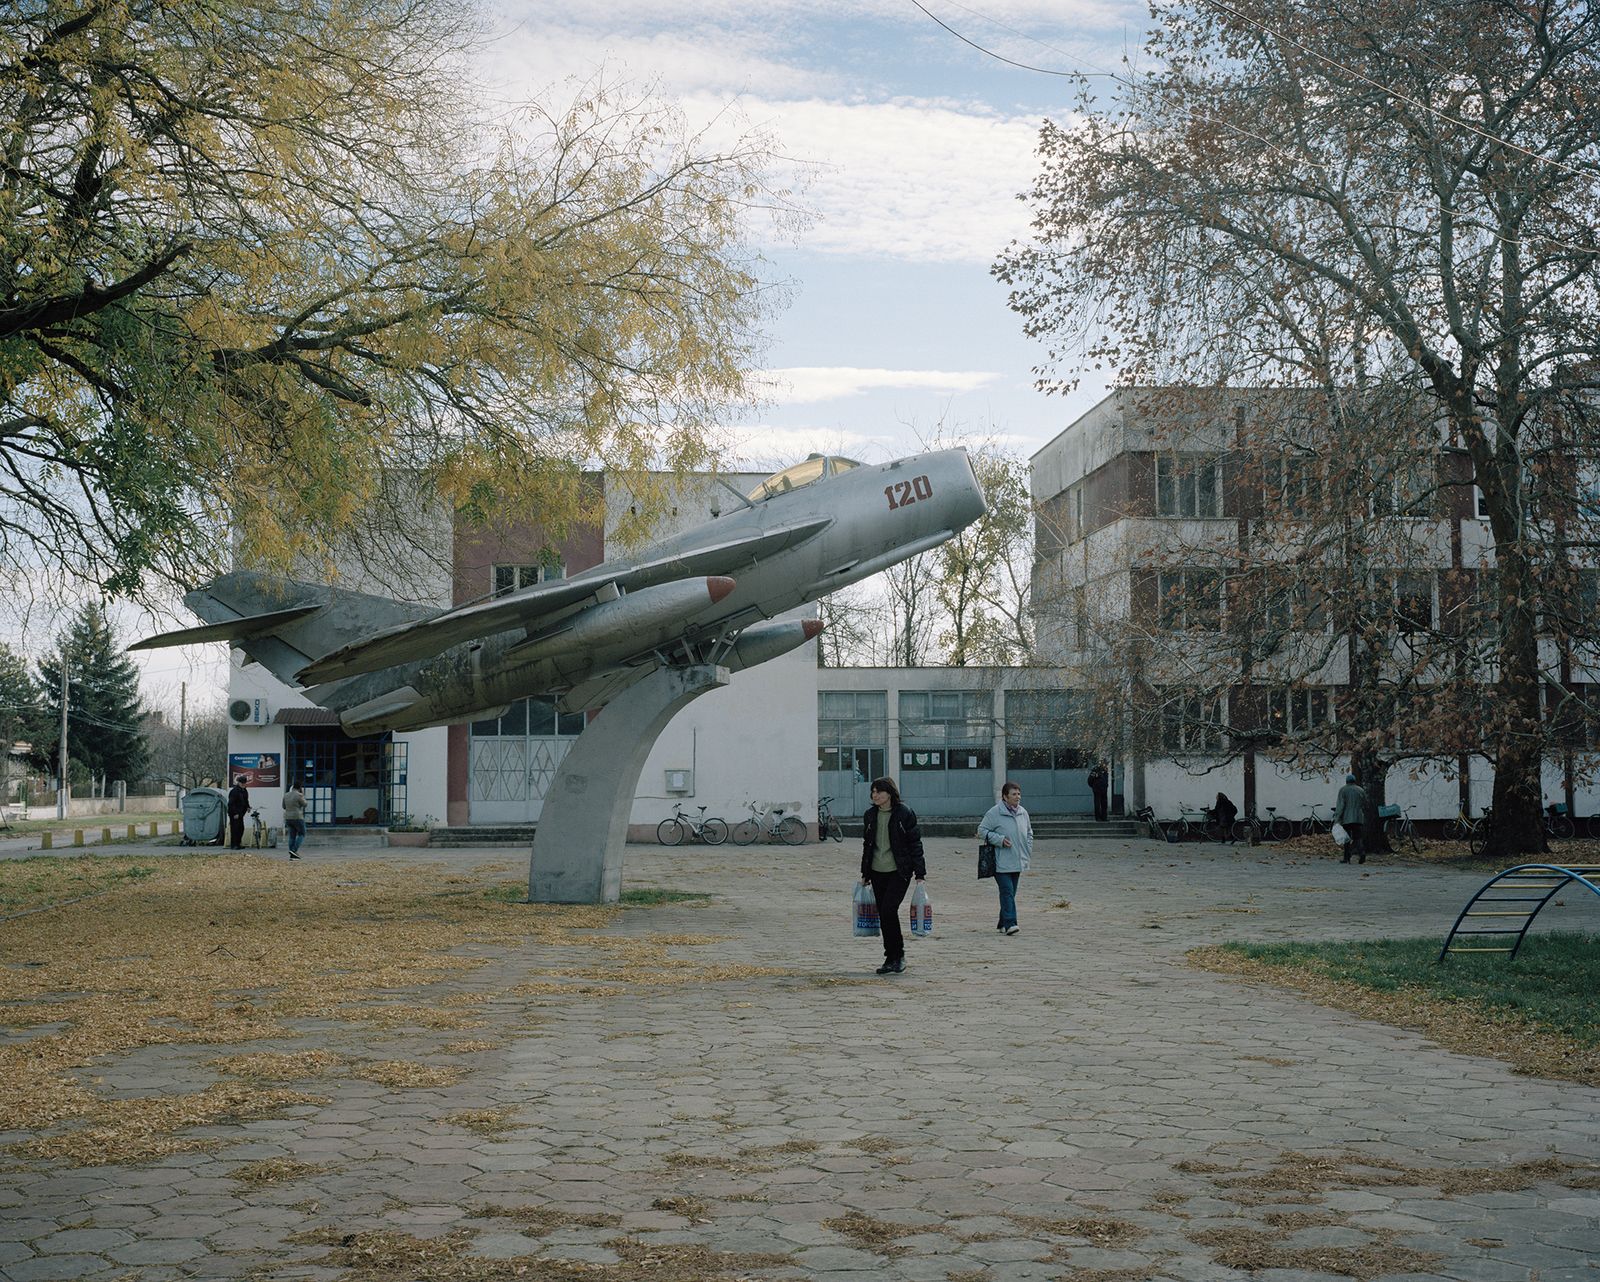 © Tommaso Rada - Bulgaria, Bardaski Geran. A MIG plane uses as a monument in the main square of a village.